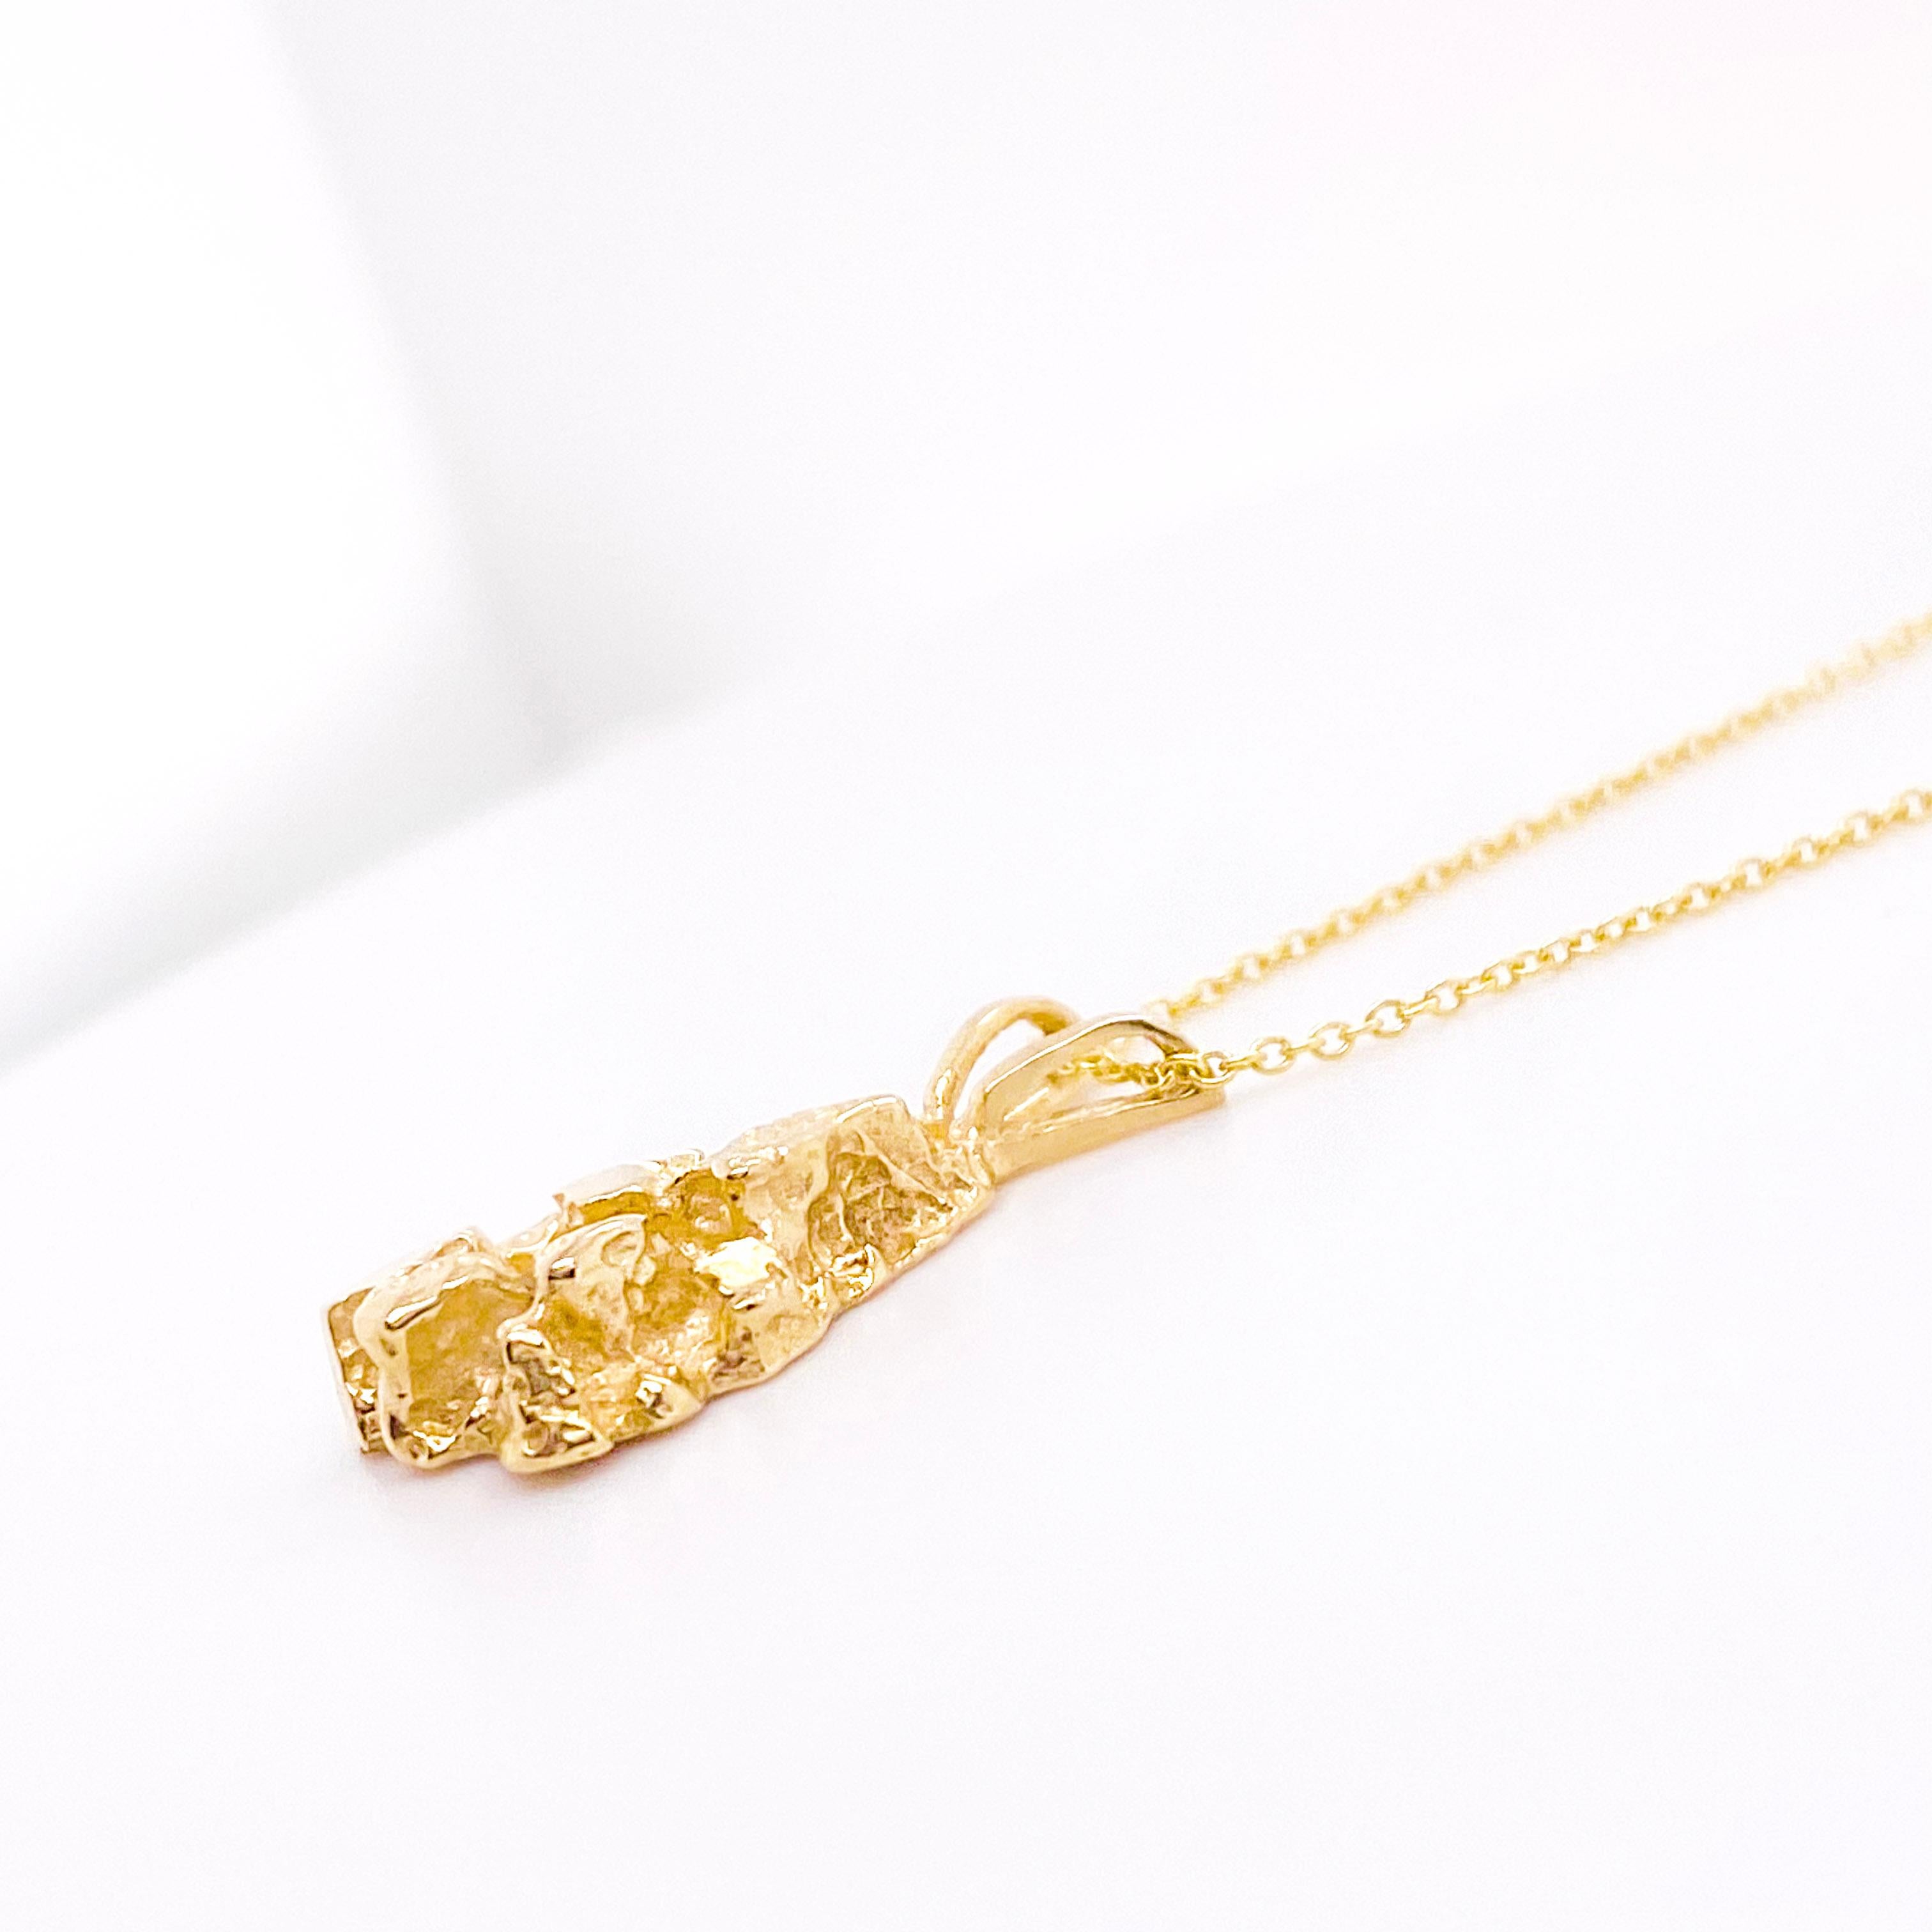 gold nugget necklace pendant